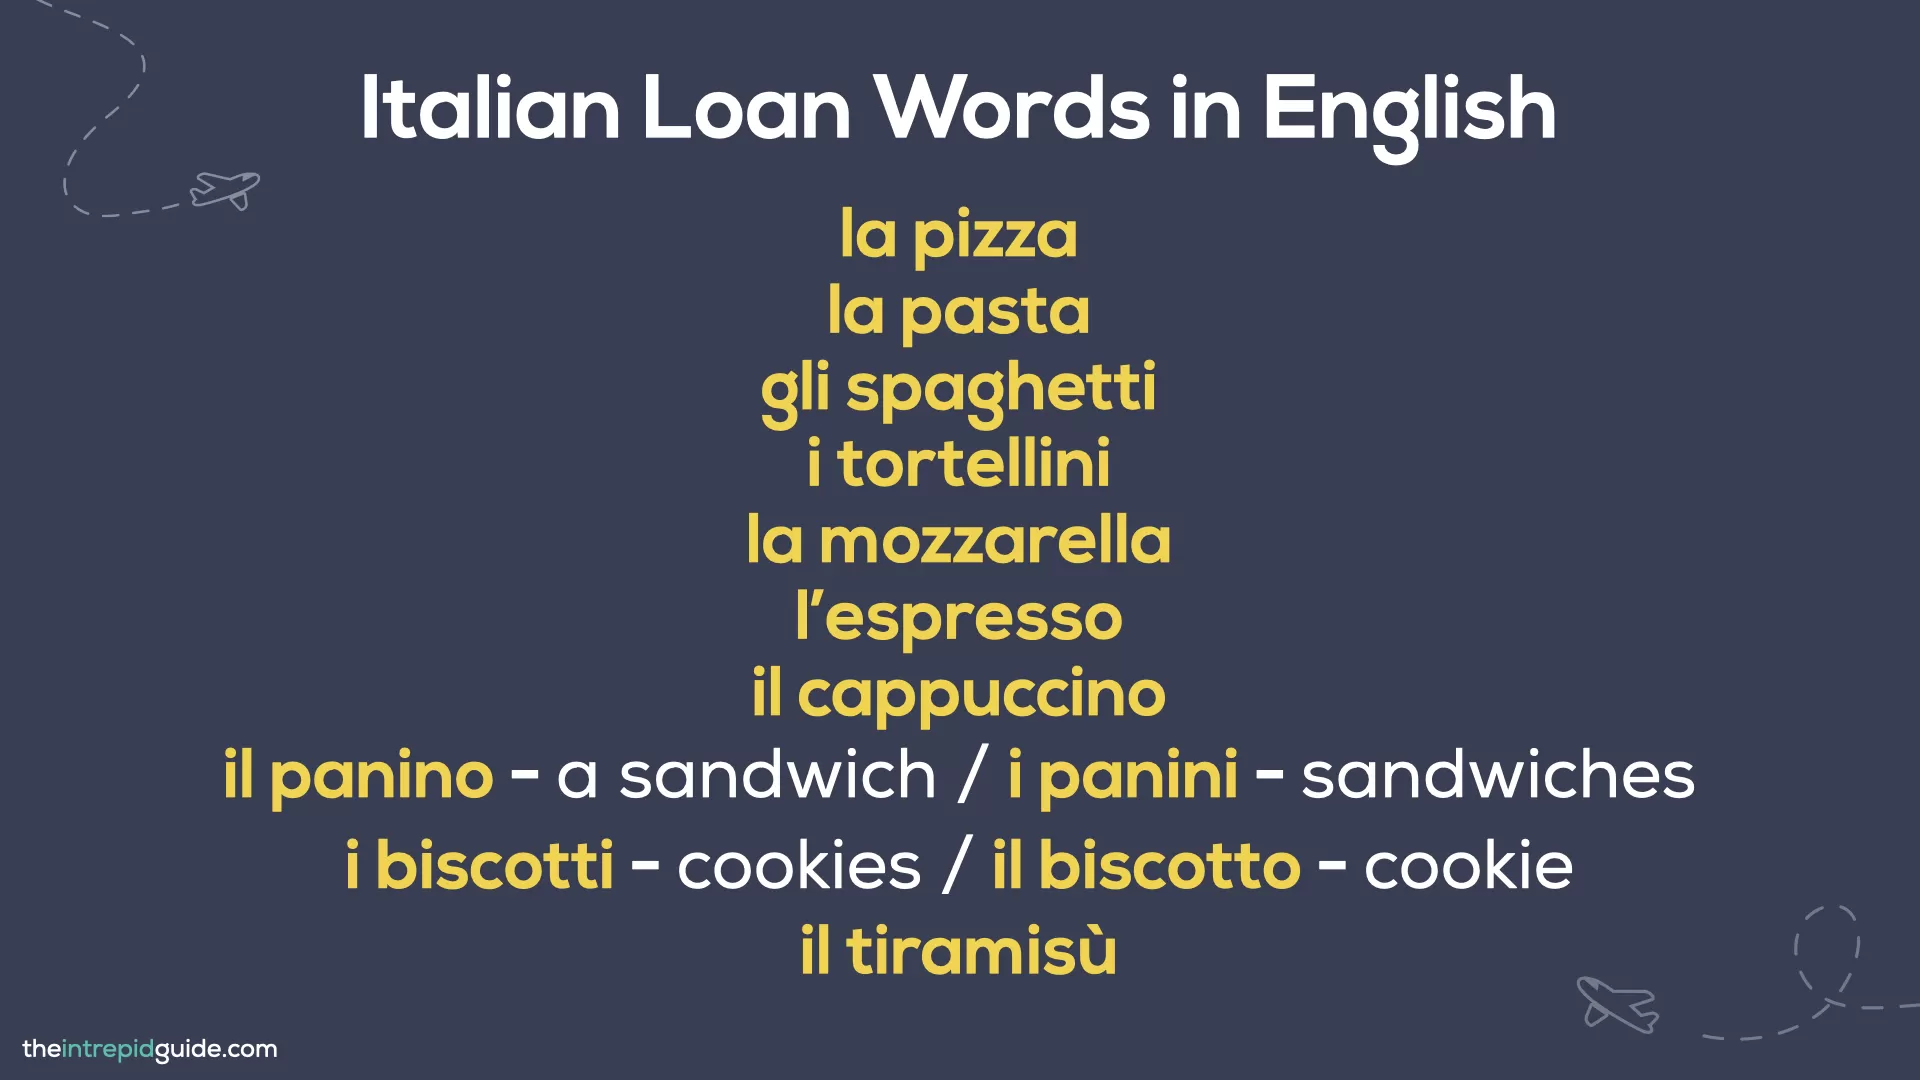 Italian cognates and loan words - Italian loan words in English